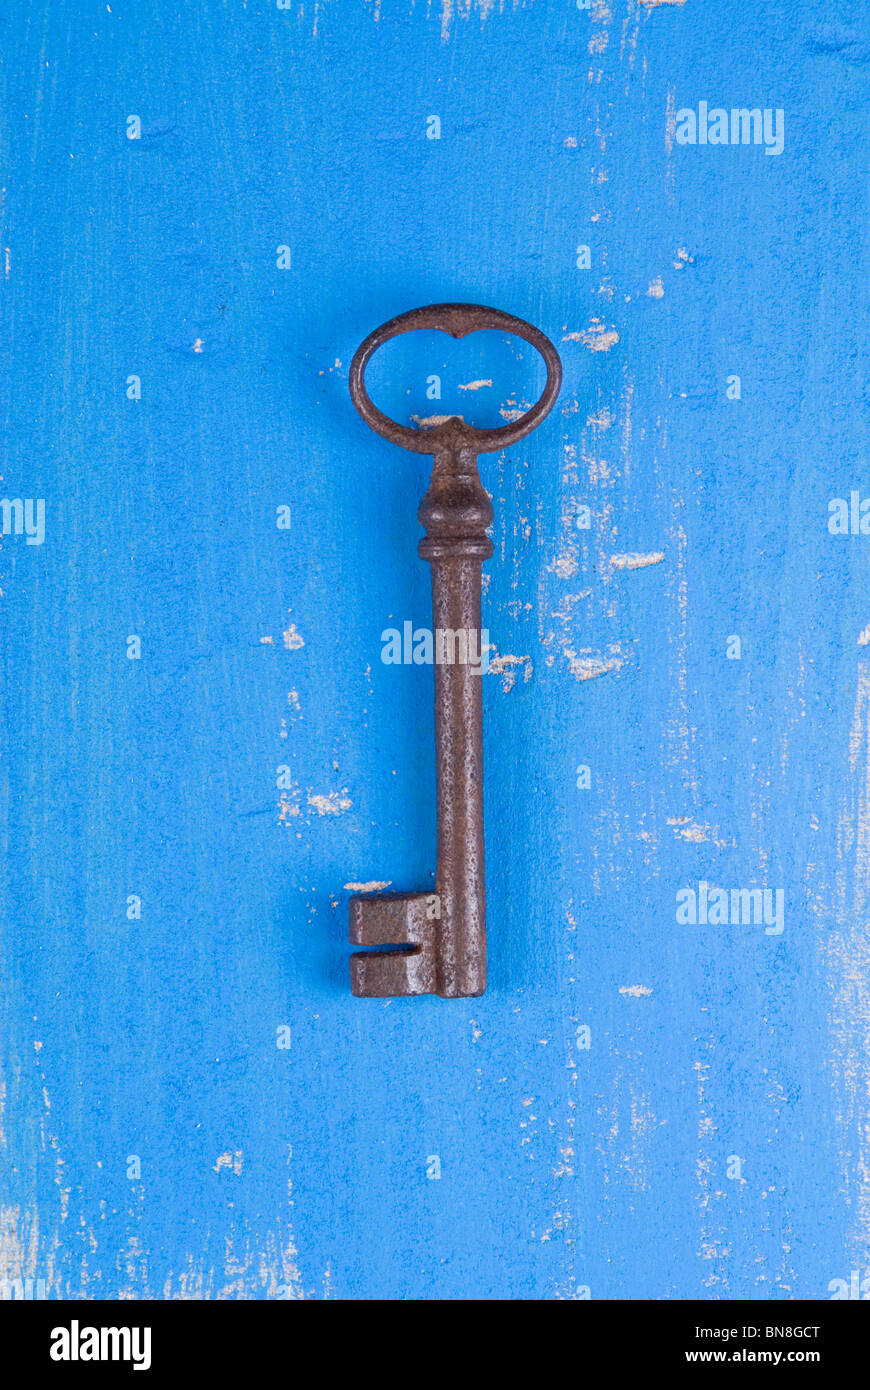 Old rusty key Stock Photo